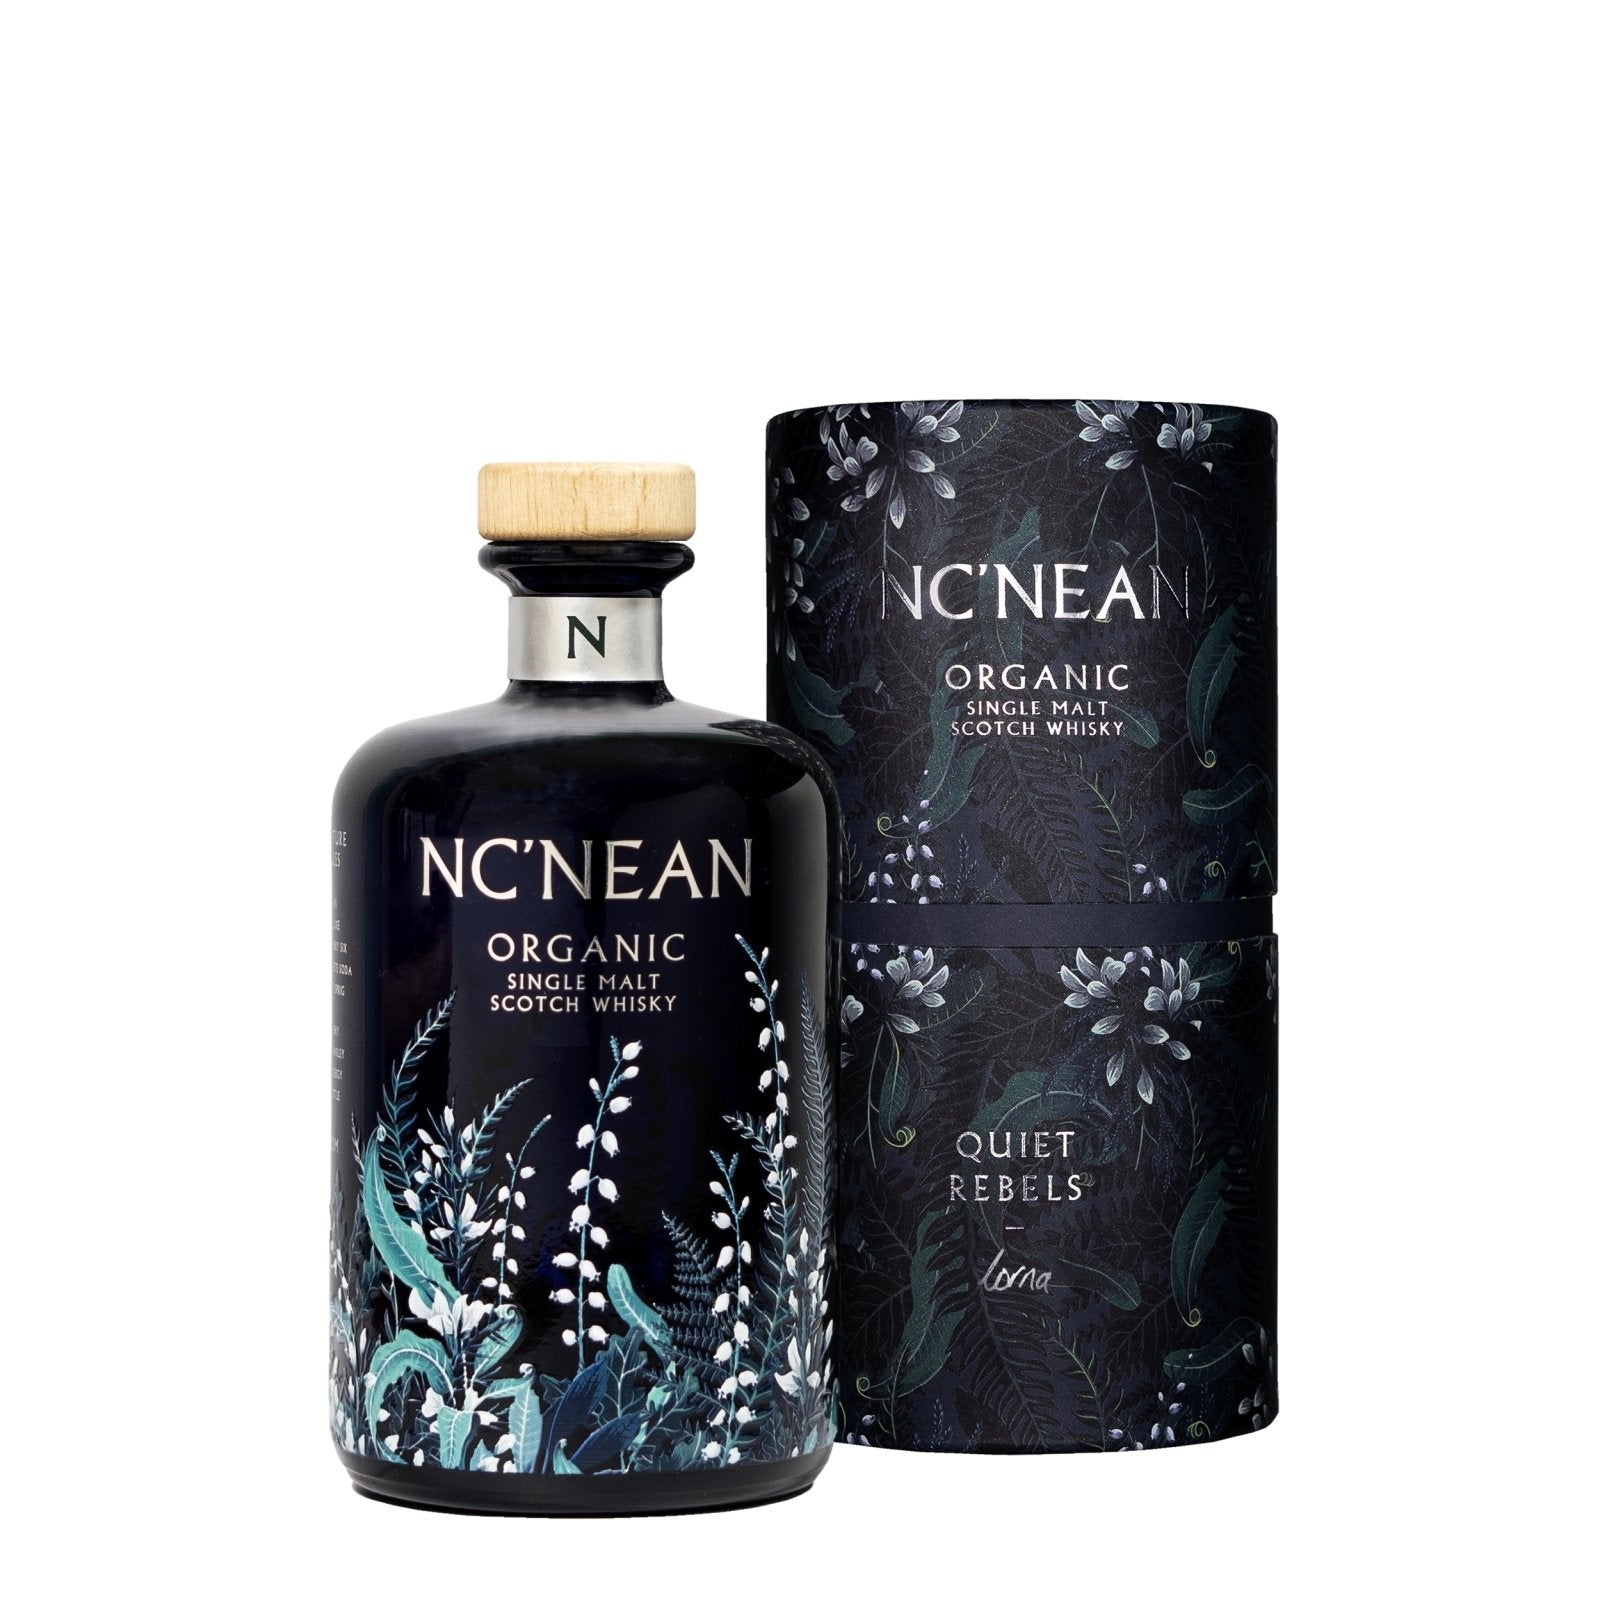 Bottle of Nc'nean Quiet Rebels, Lorna, Organic Single Malt Scotch Whisky, 48.5%